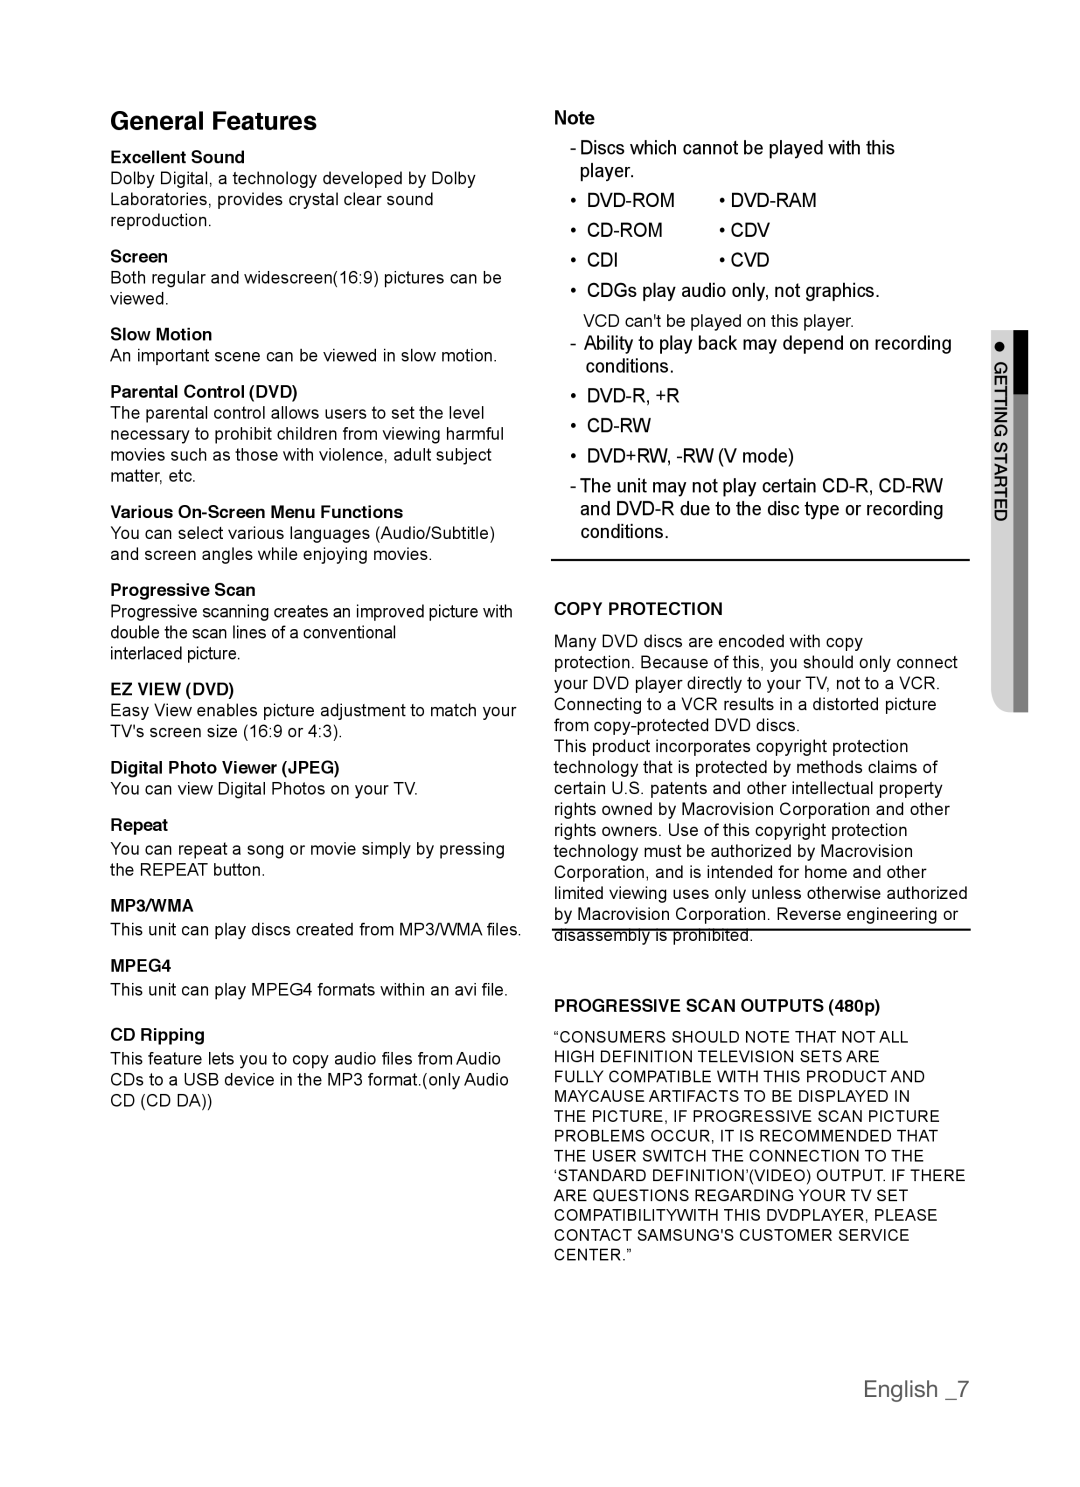 Samsung AK68-01770G, DVD-P390 user manual General Features, English 